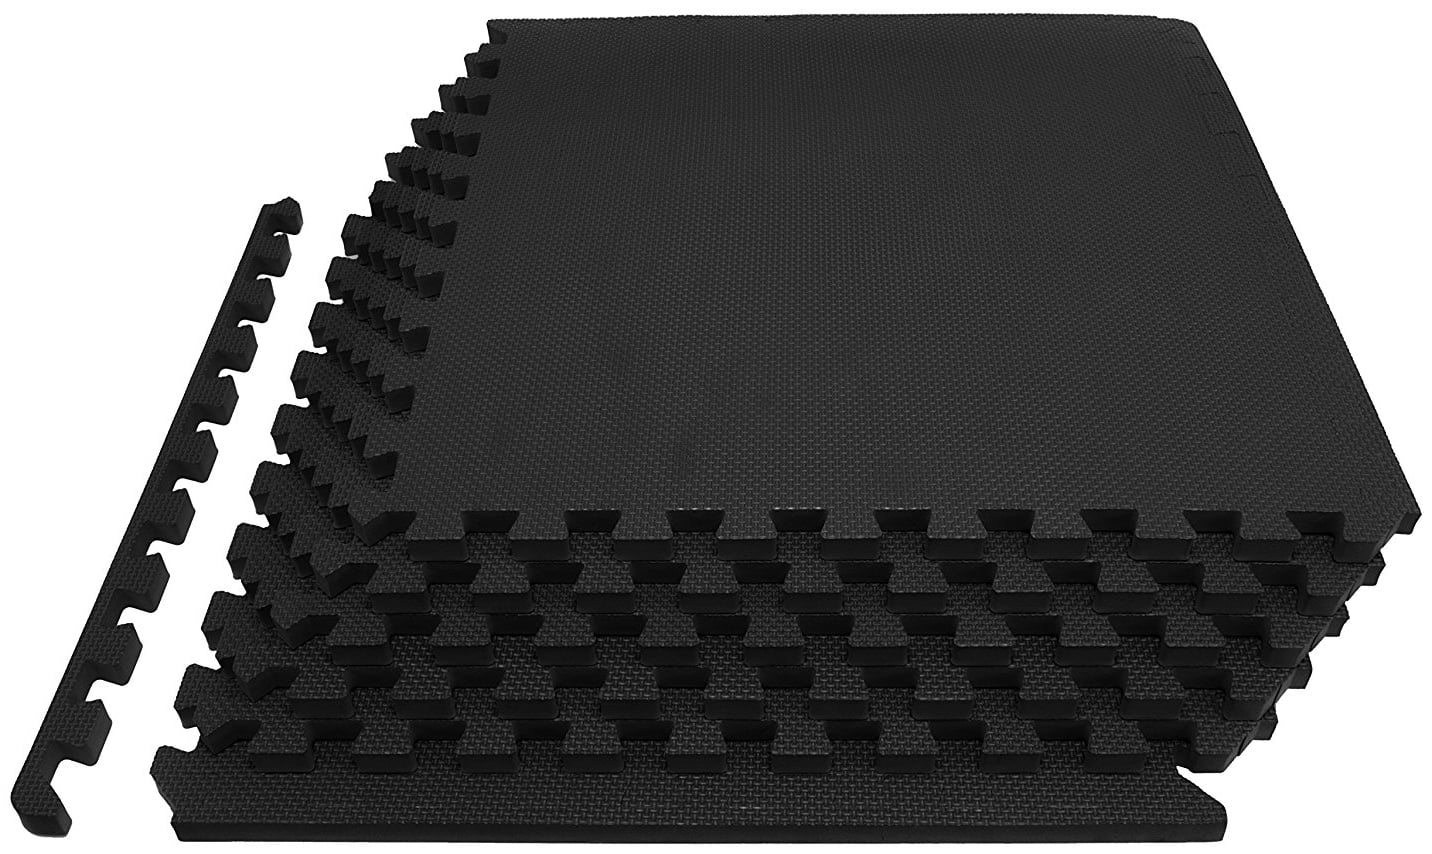 144 sqft black interlocking foam floor puzzle tile mat child gym flooring safety 